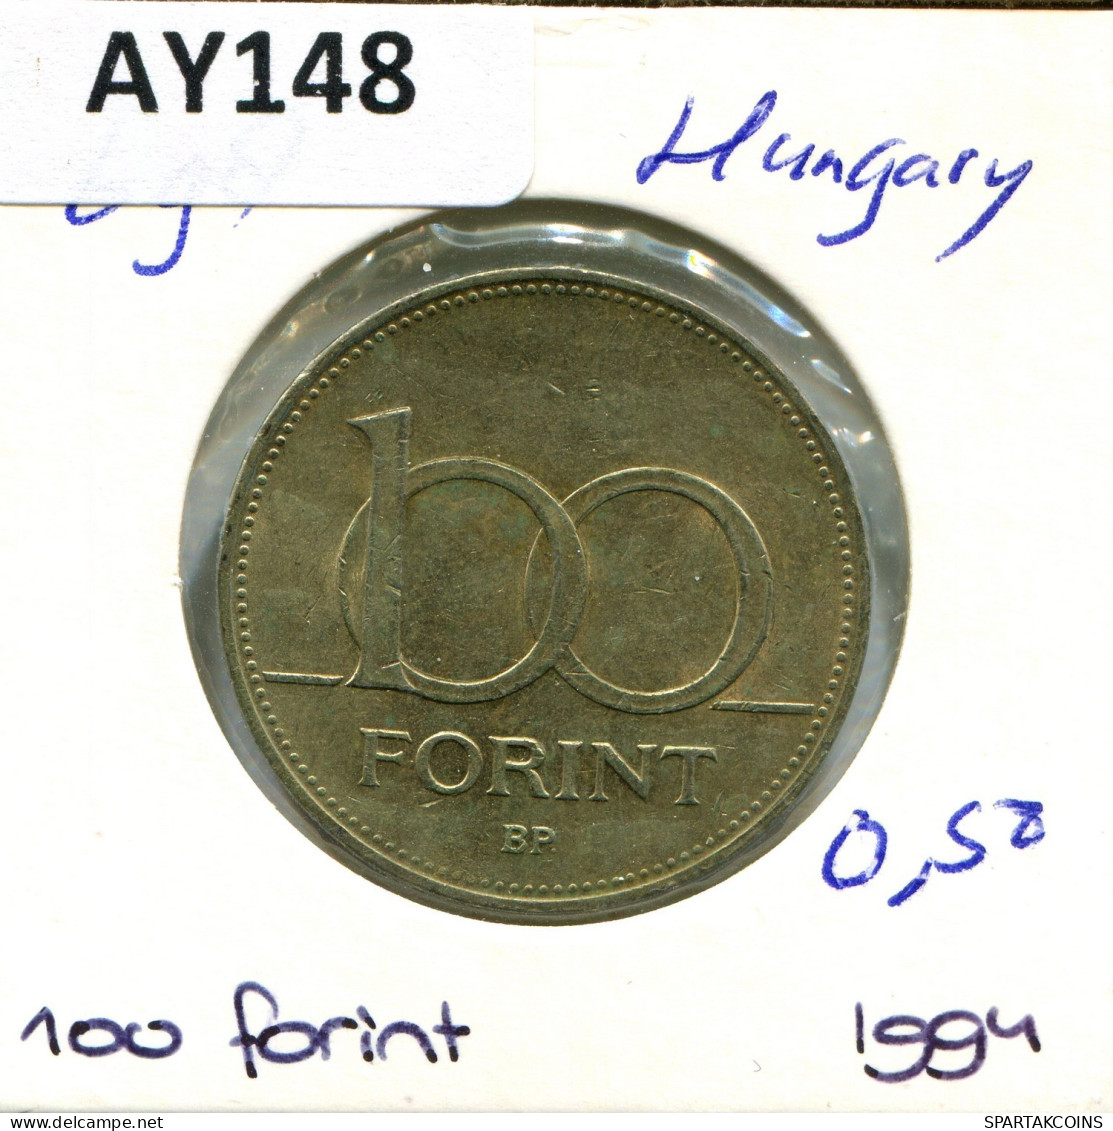 100 FORINT 1994 HUNGARY Coin #AY148.2.U.A - Ungarn